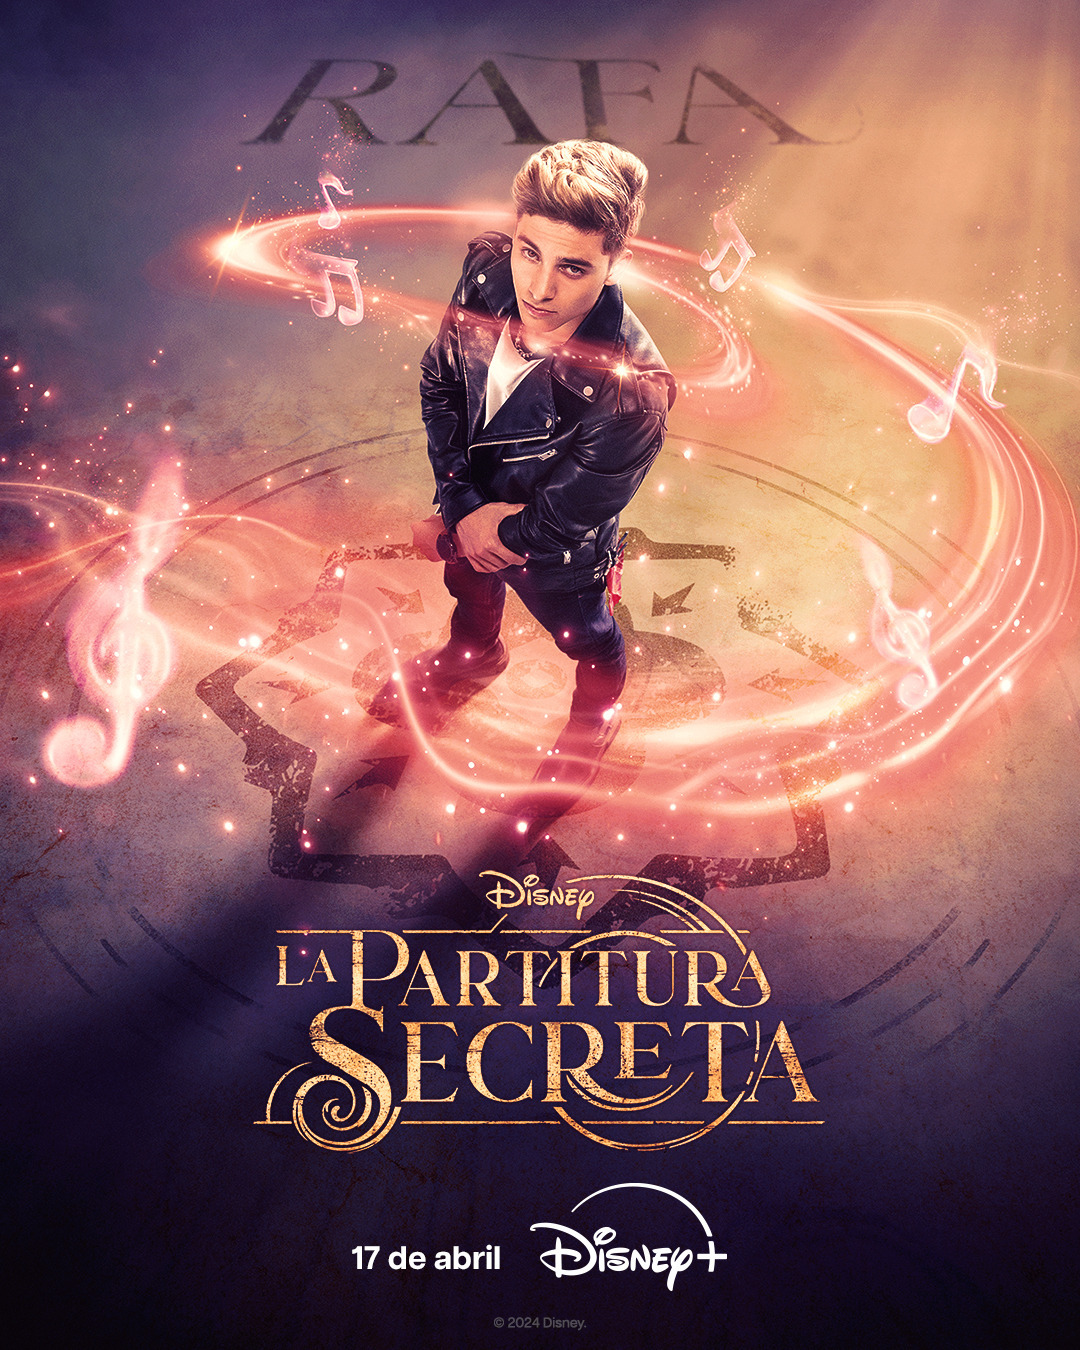 Extra Large TV Poster Image for La partitura secreta (#6 of 7)